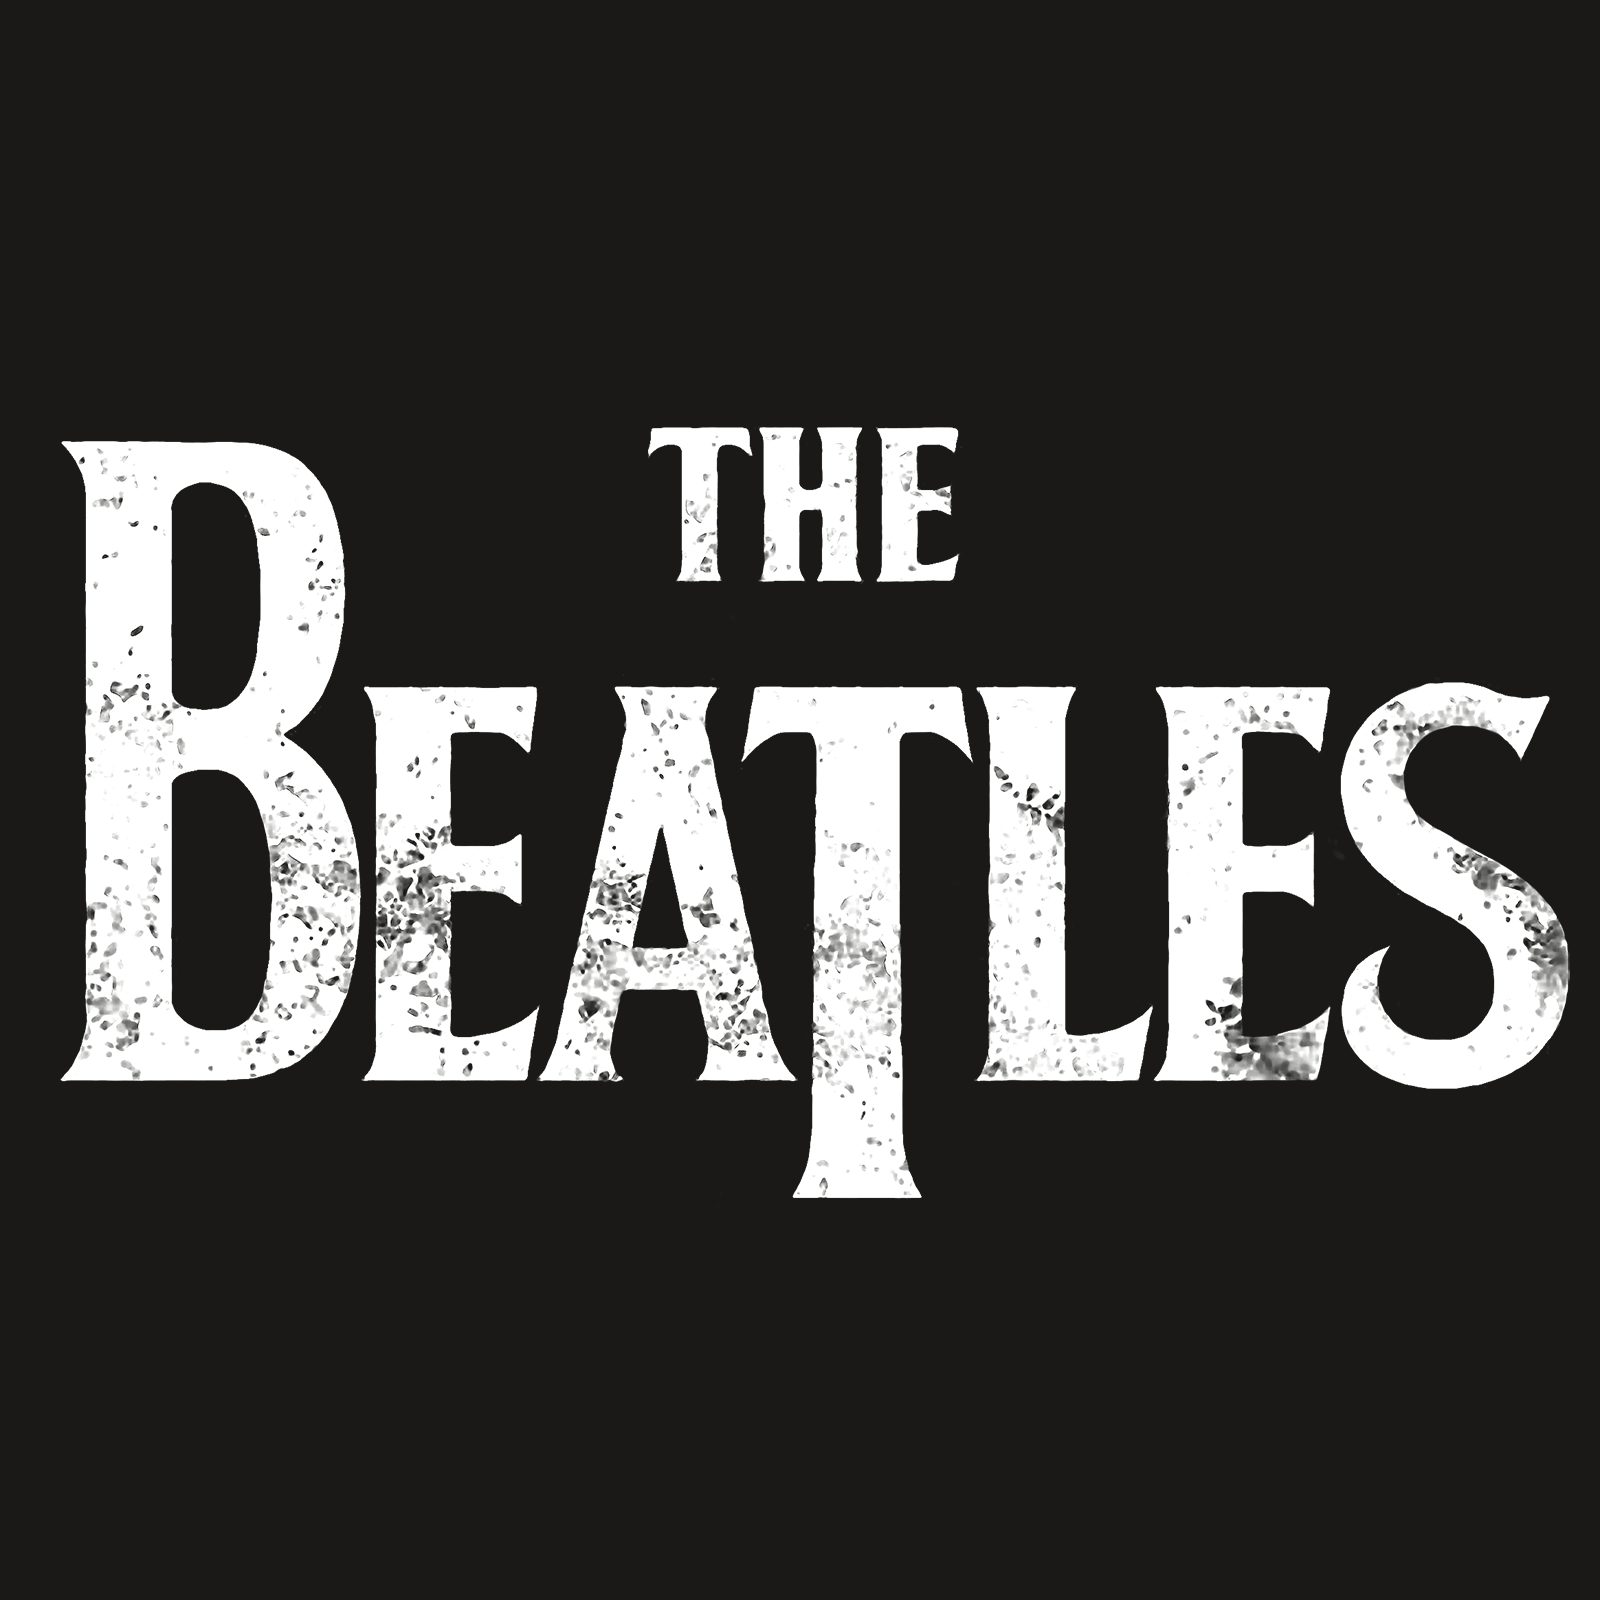 The Beatles Design T Shirt